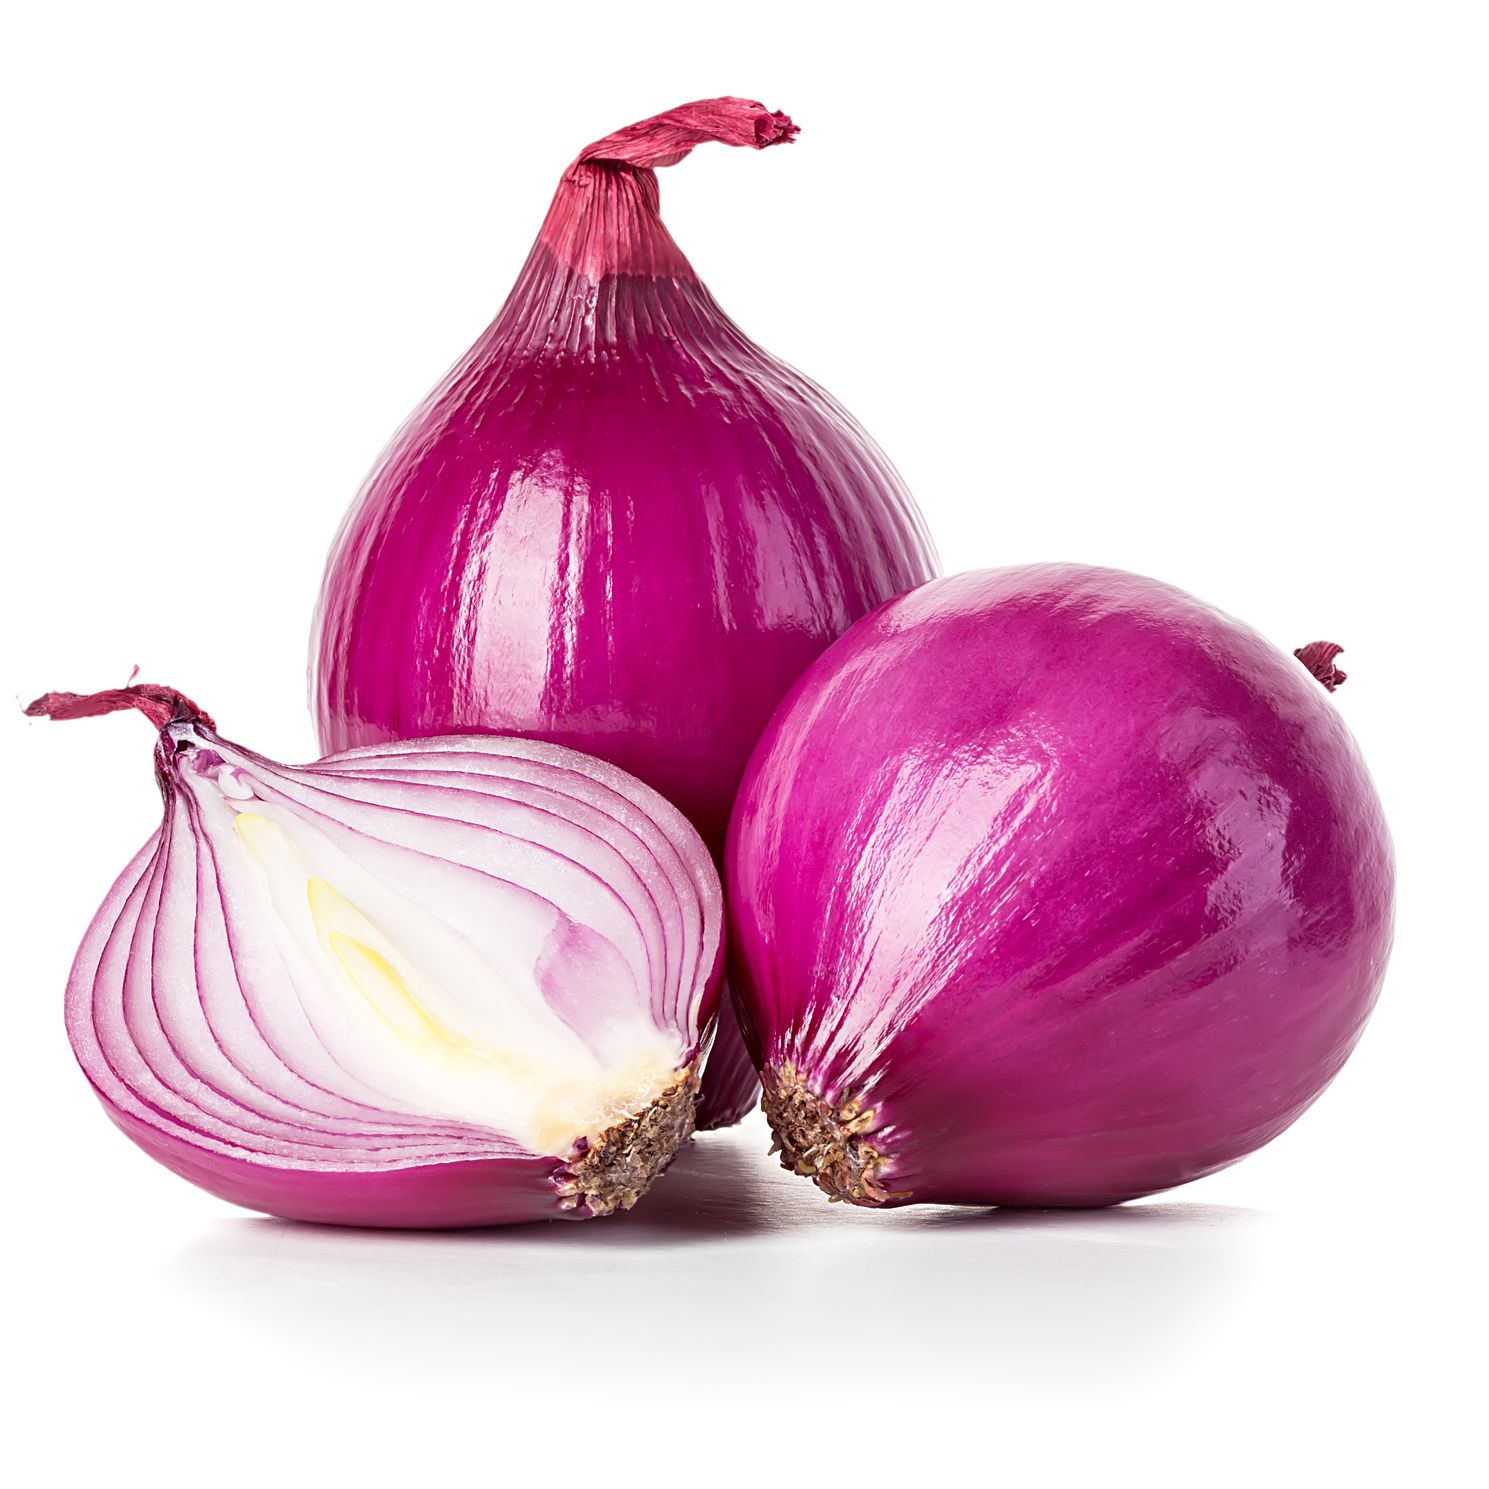 Unpeeling the Onion